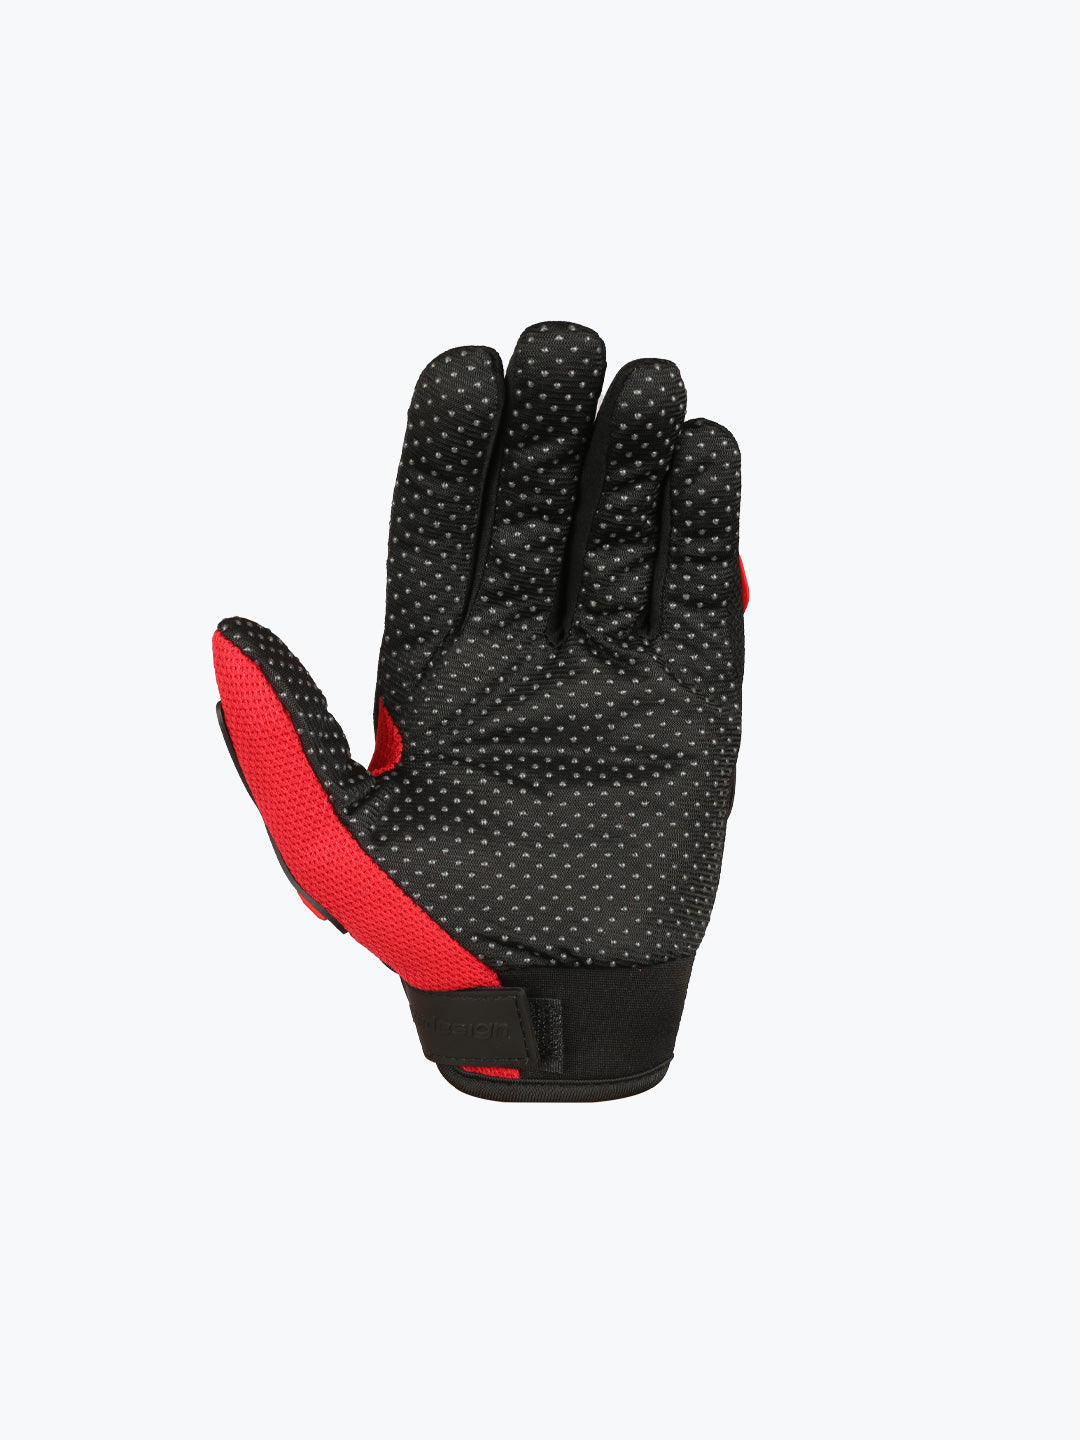 AXG Glove Red